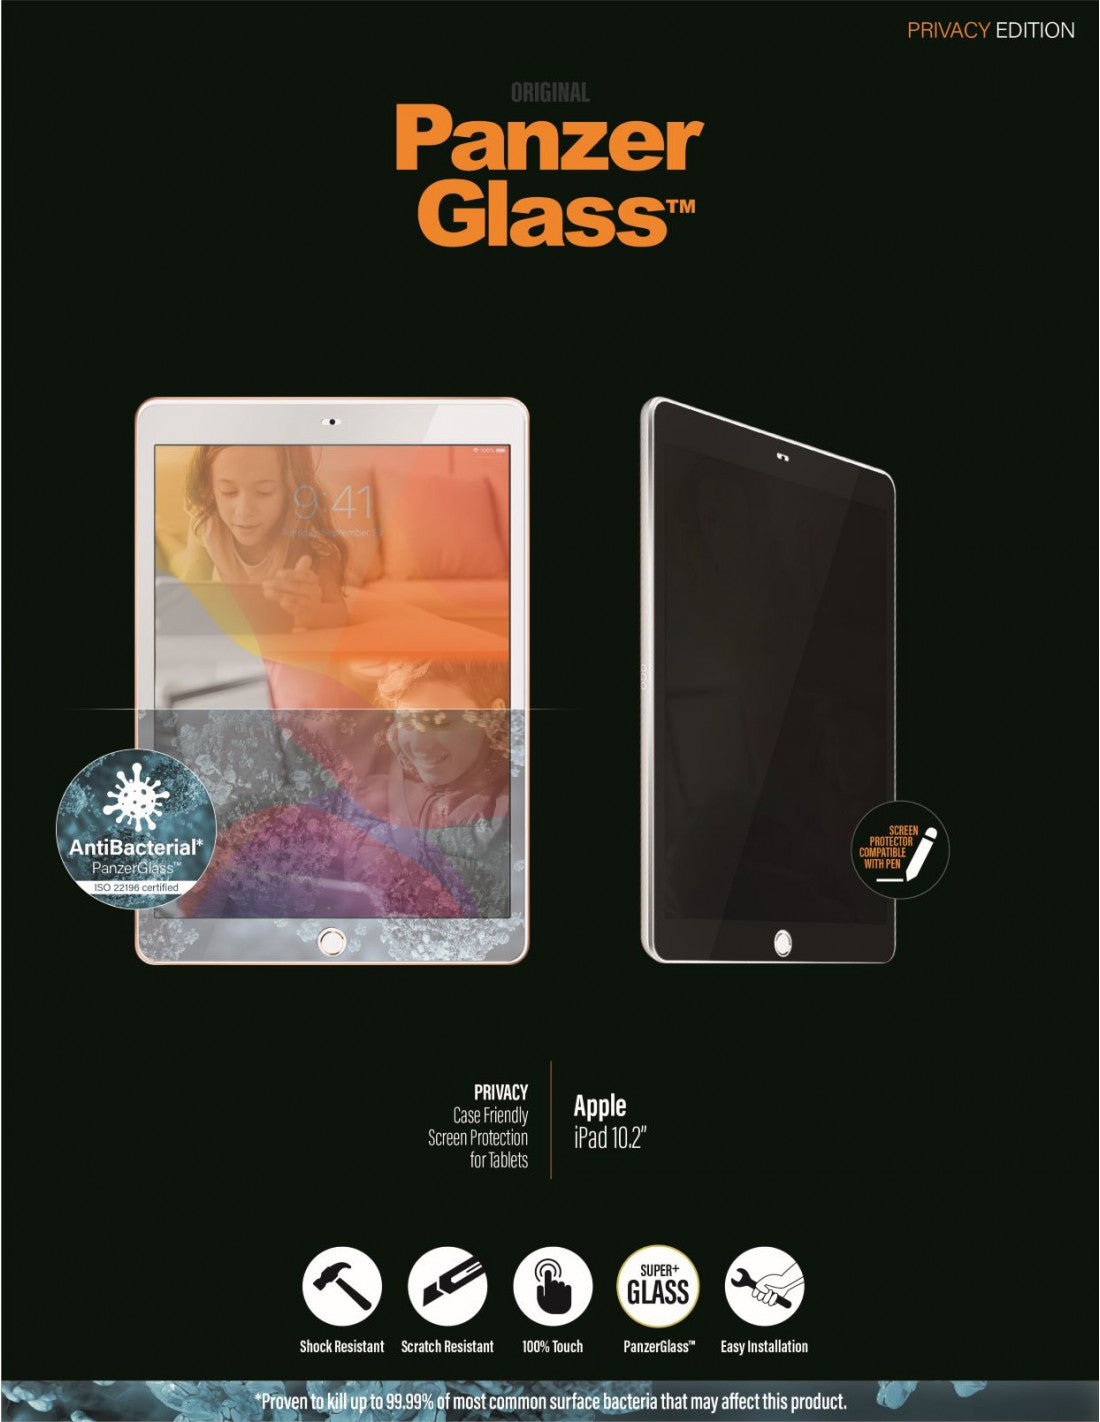 PanzerGlass Tempered Glass Screen Guard iPad 10.2 inch